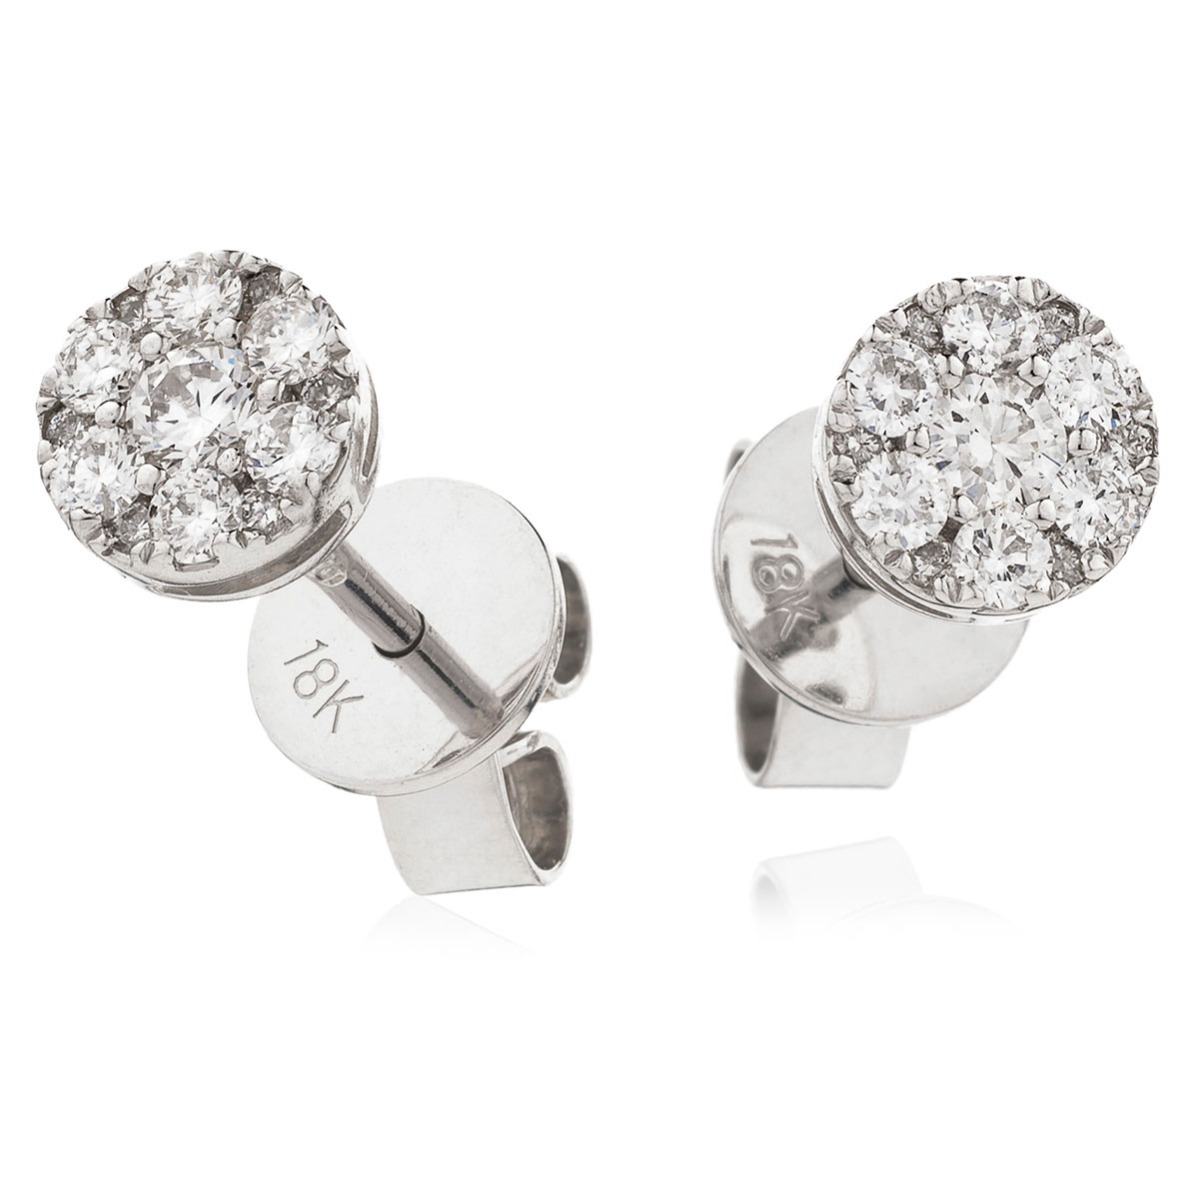 Small Pave Set Diamond Earring Studs